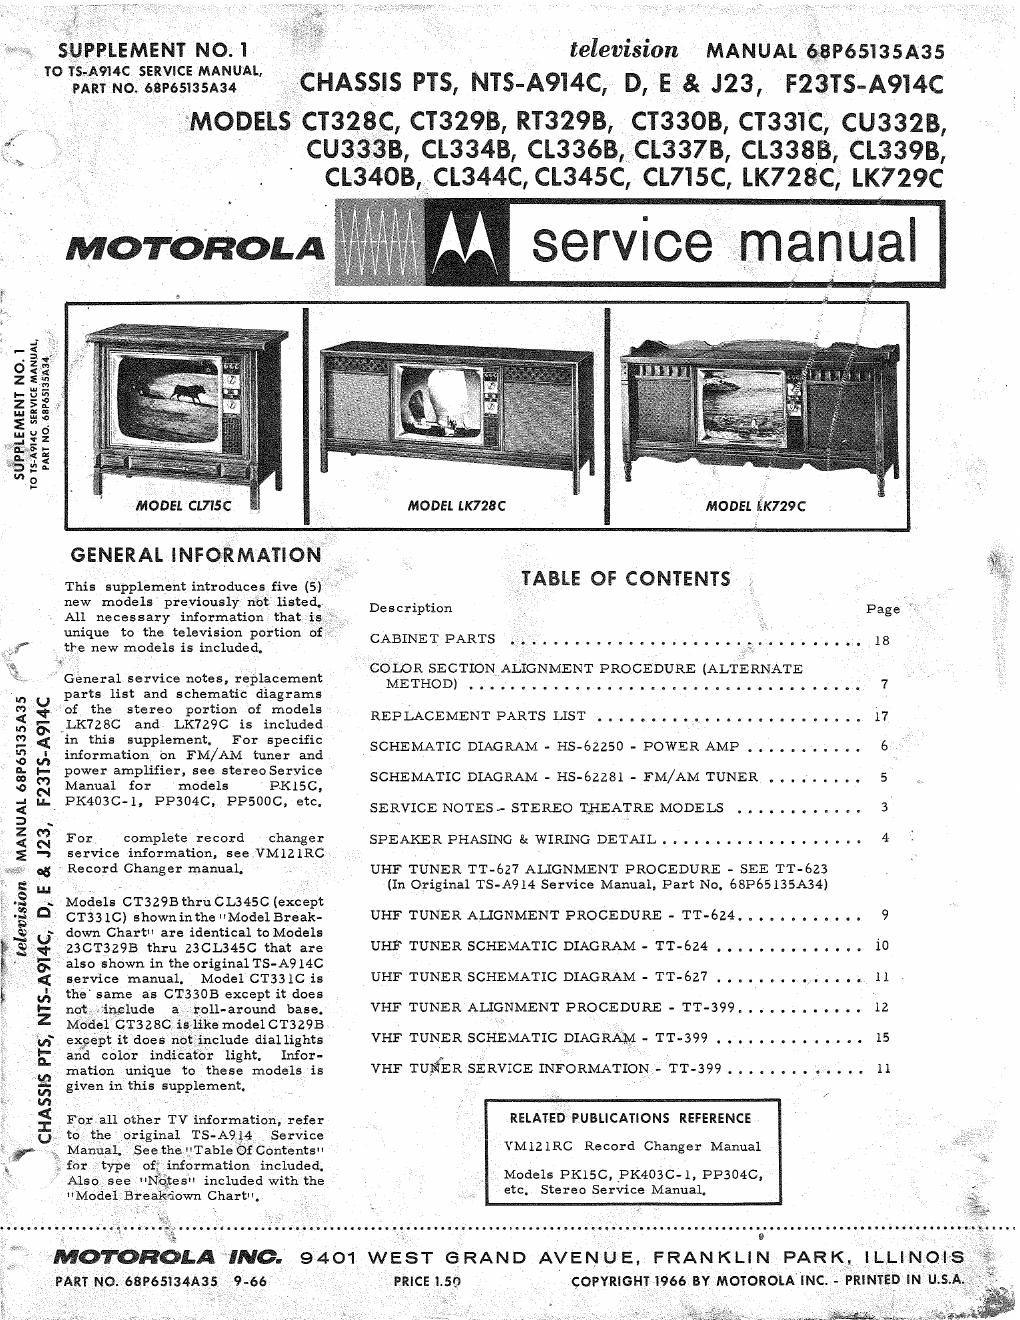 motorola cl 715 c service manual